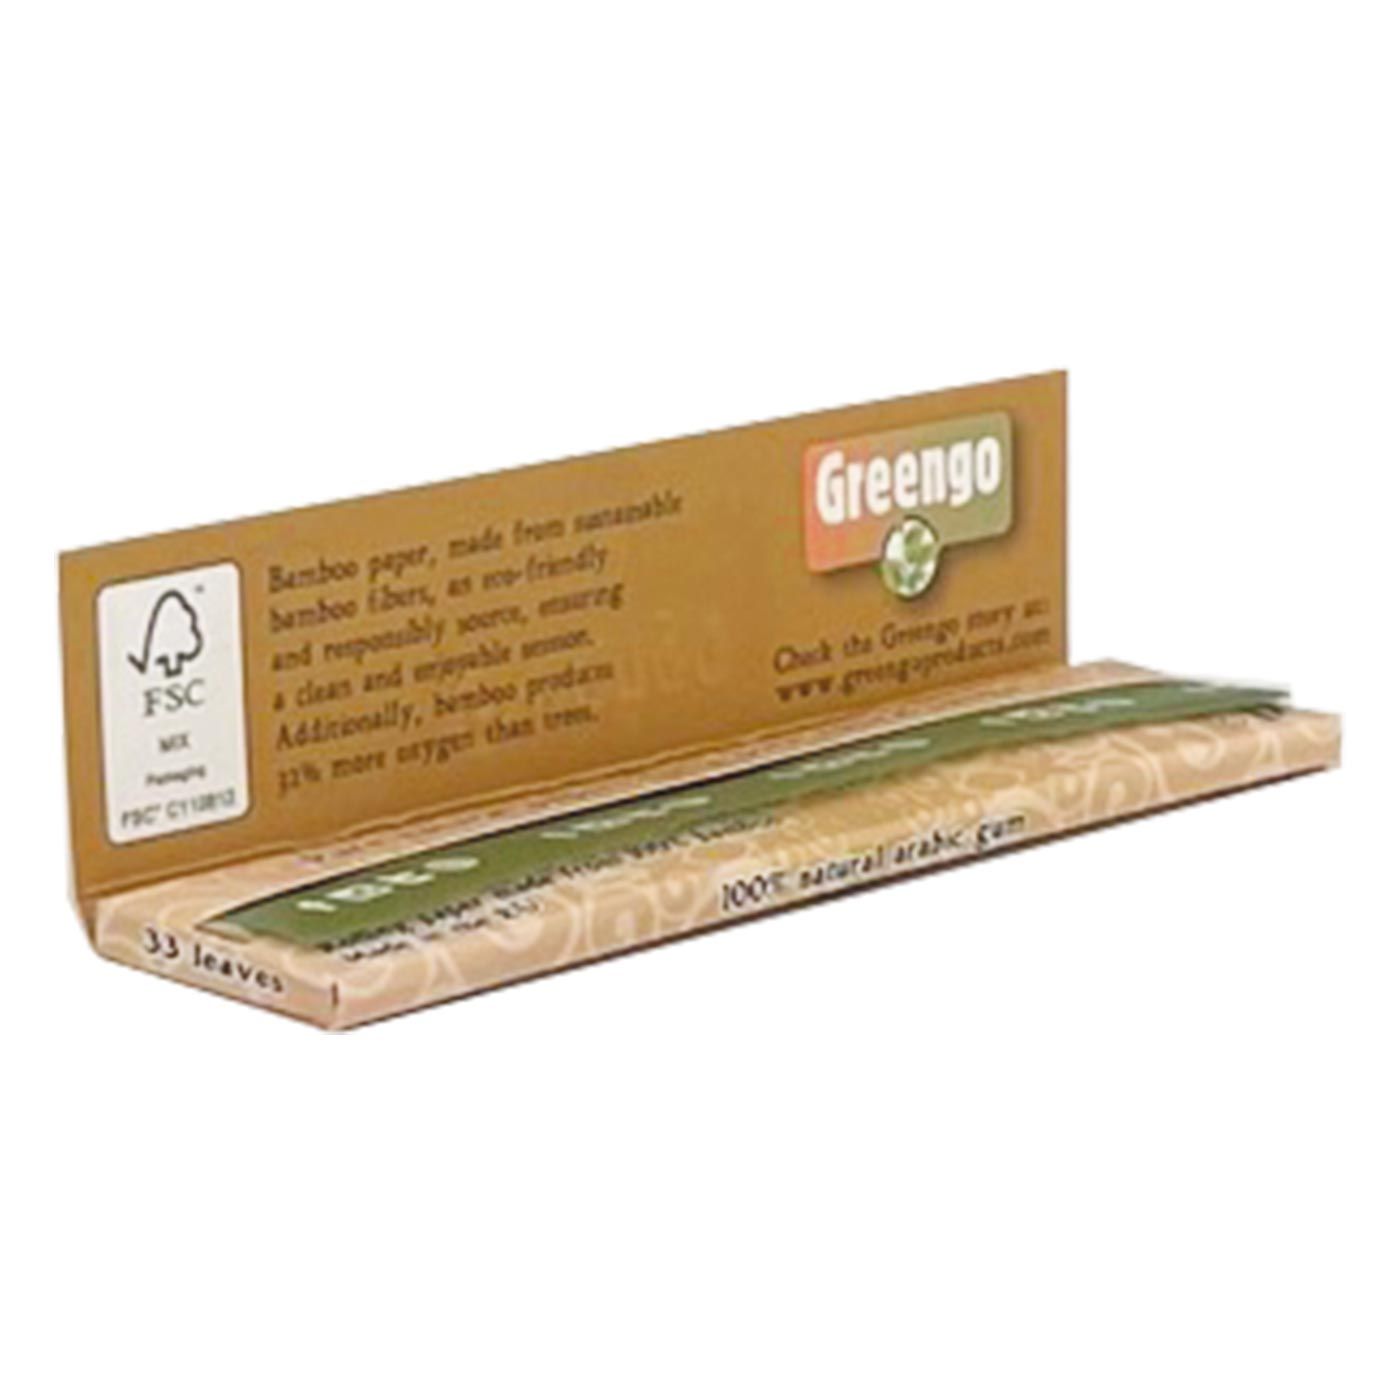 Display Greengo Bamboo King Size Slim 50 Pcs